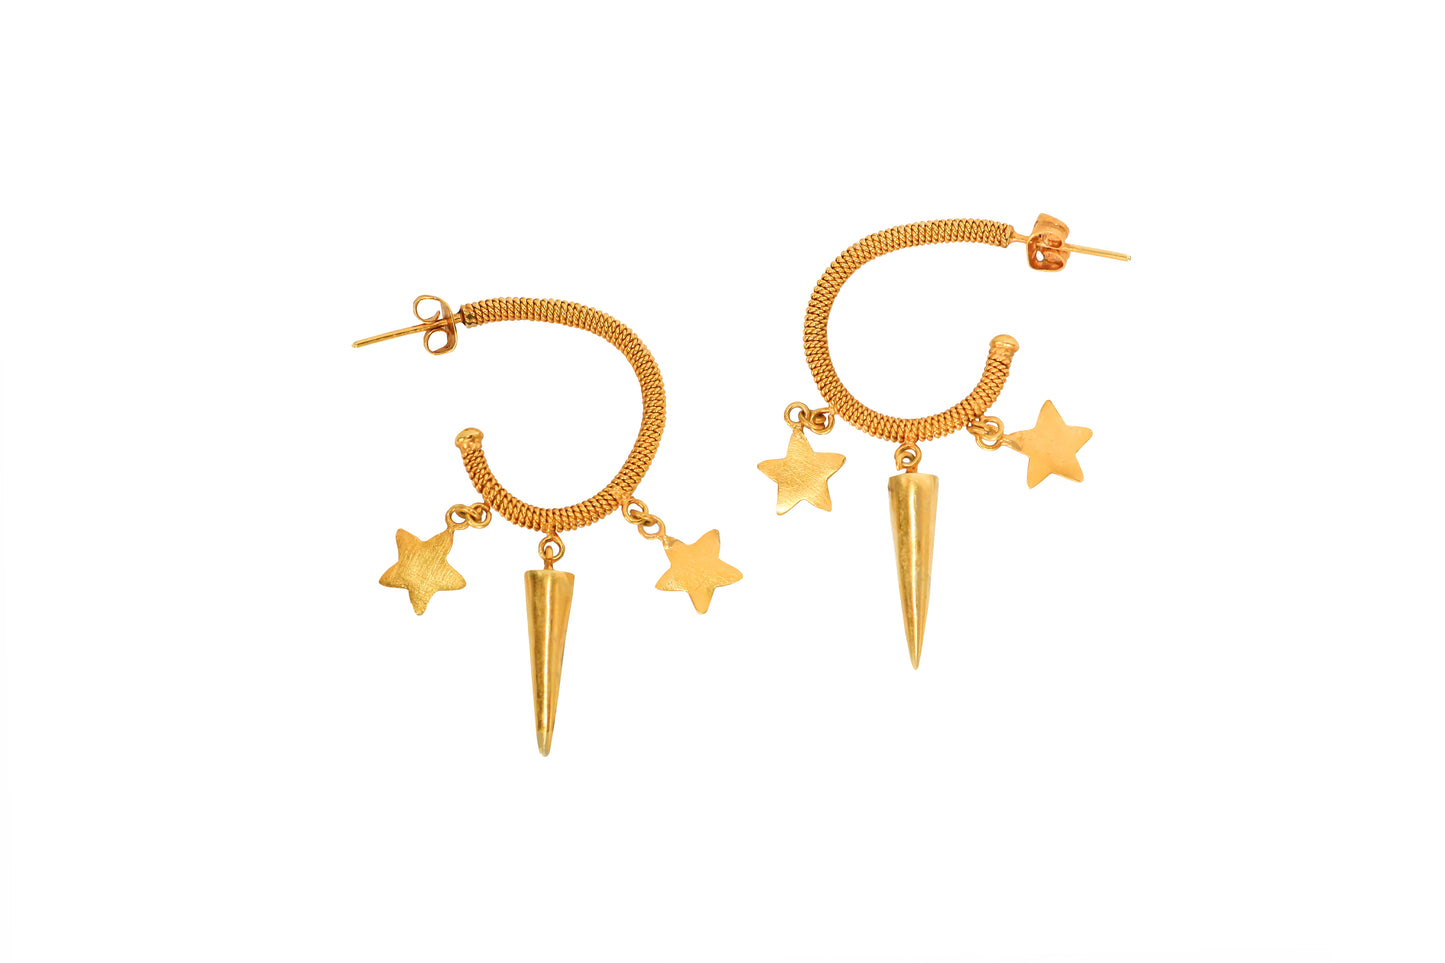 Handmade gold hoops earrings